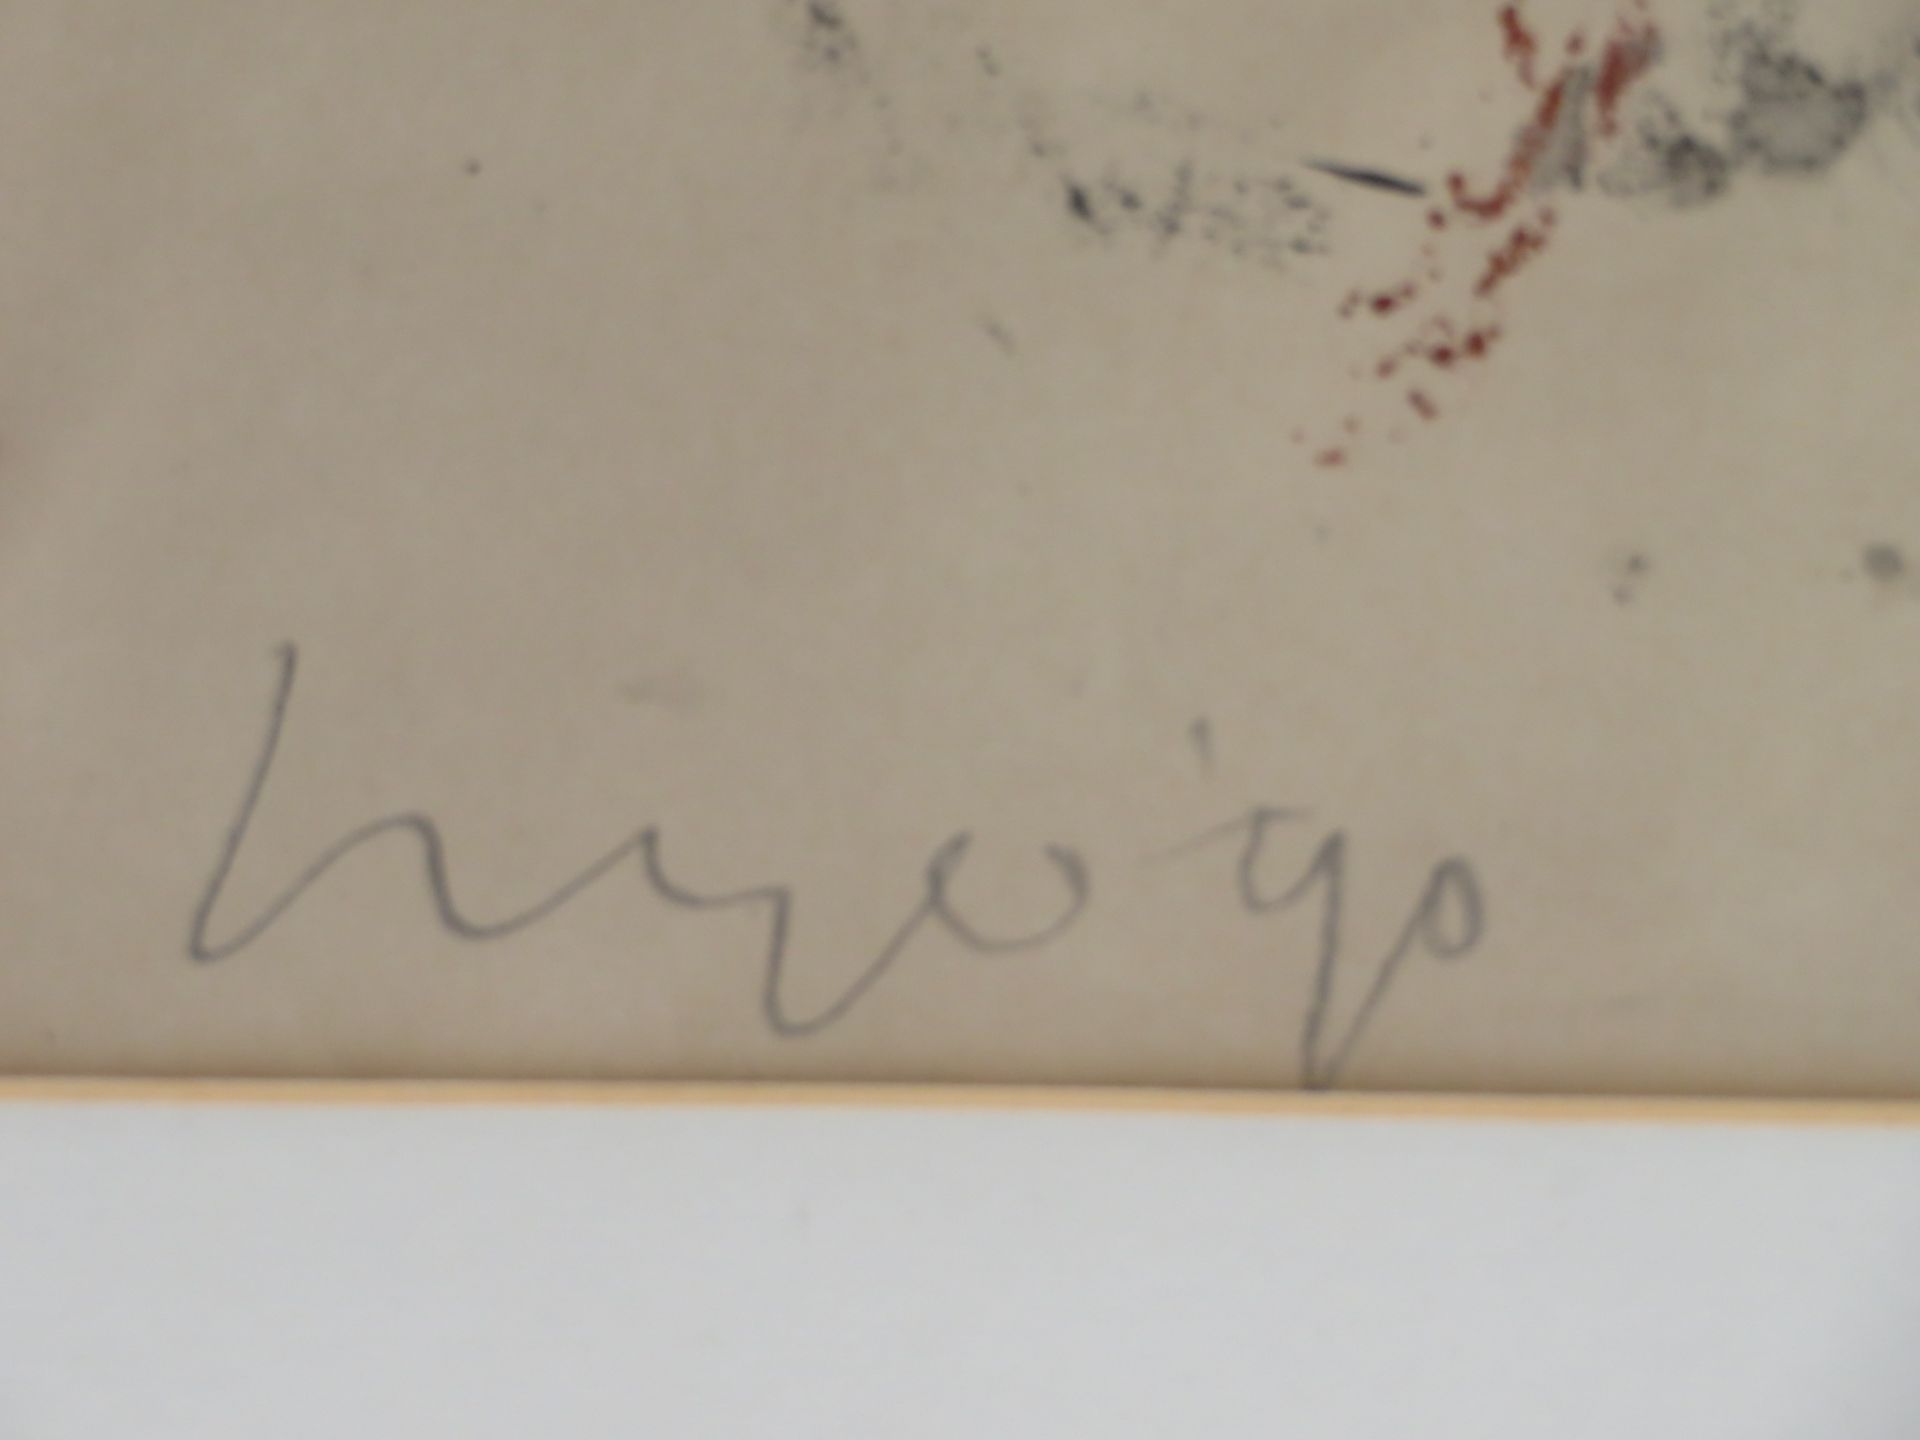 Unles.sign., "Komposition", u. Bleistift sign.u.dat. (19)90, Aquarell, 31 x 20 cm, R. [45 x 33 cm] - Image 2 of 2